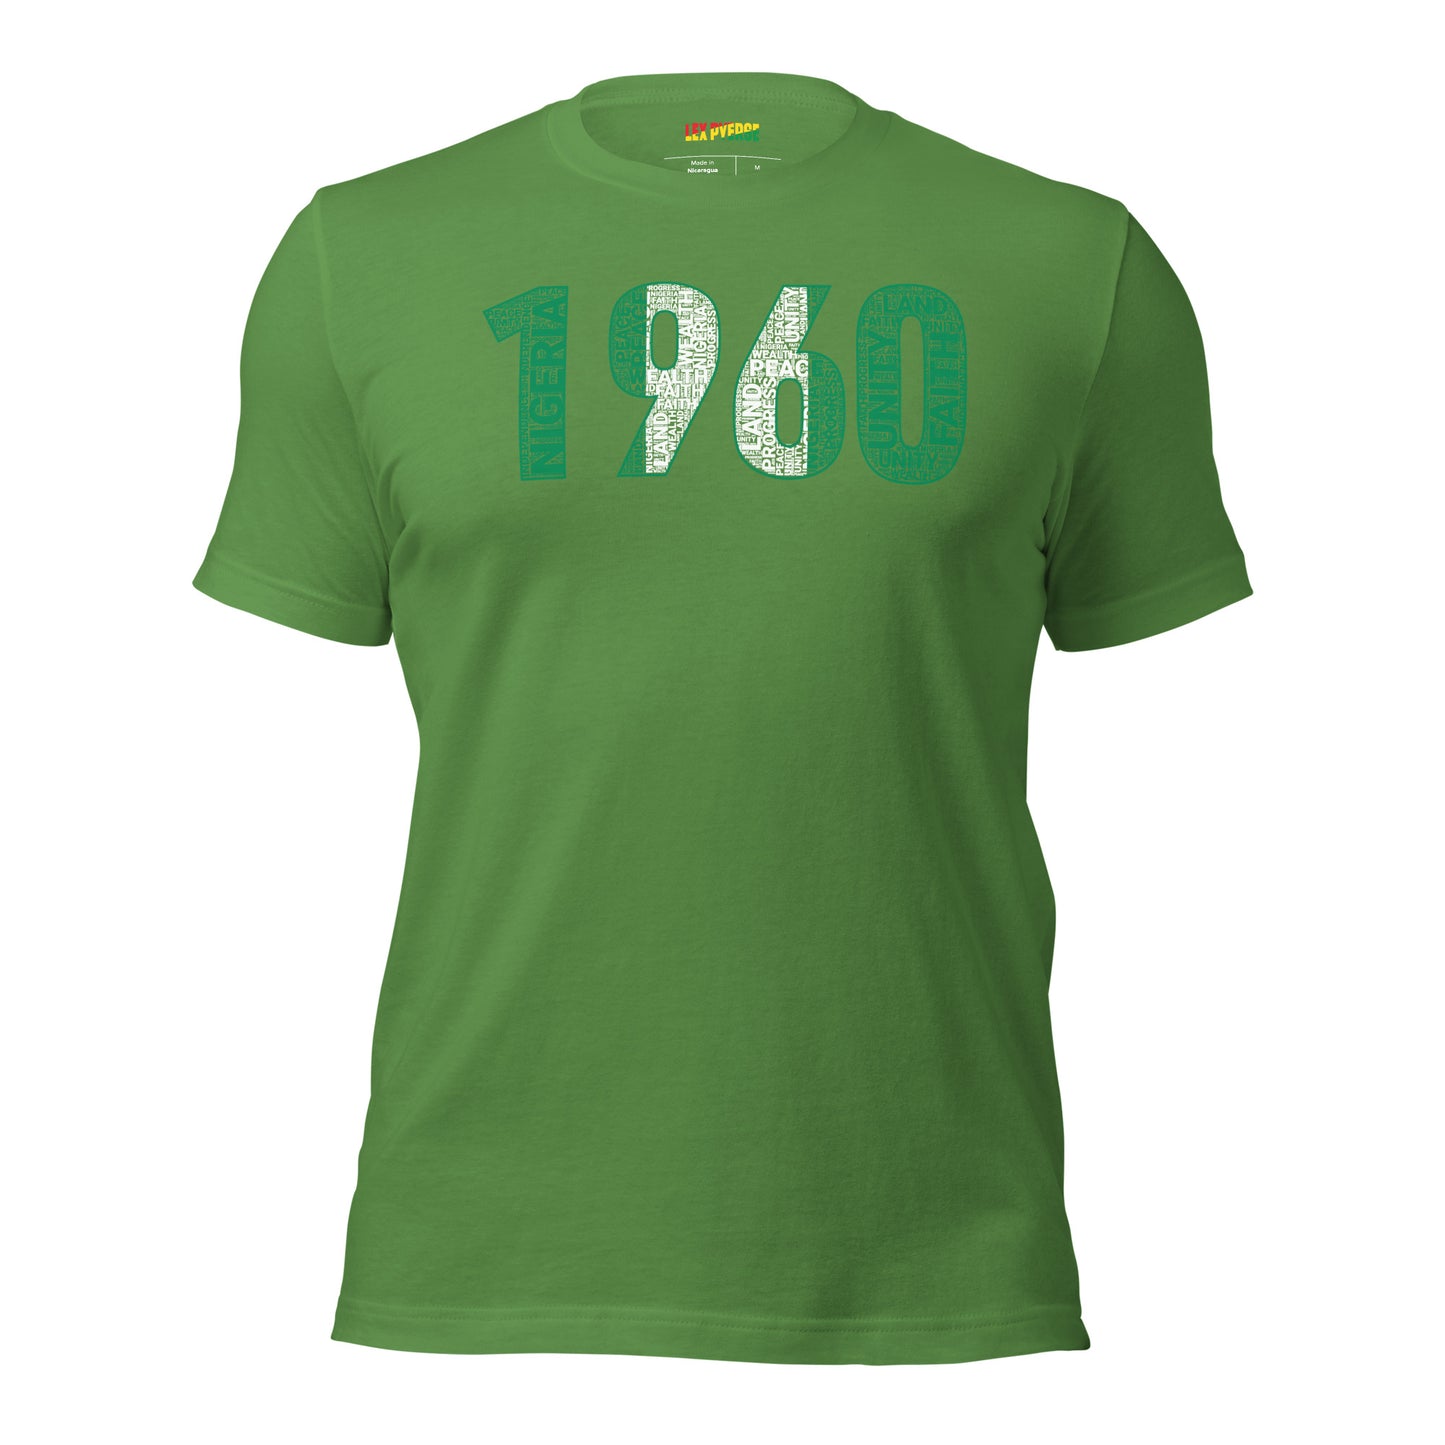 1960 Nigeria Independence Year Word Cluster Tee Short-Sleeve Unisex T-Shirt